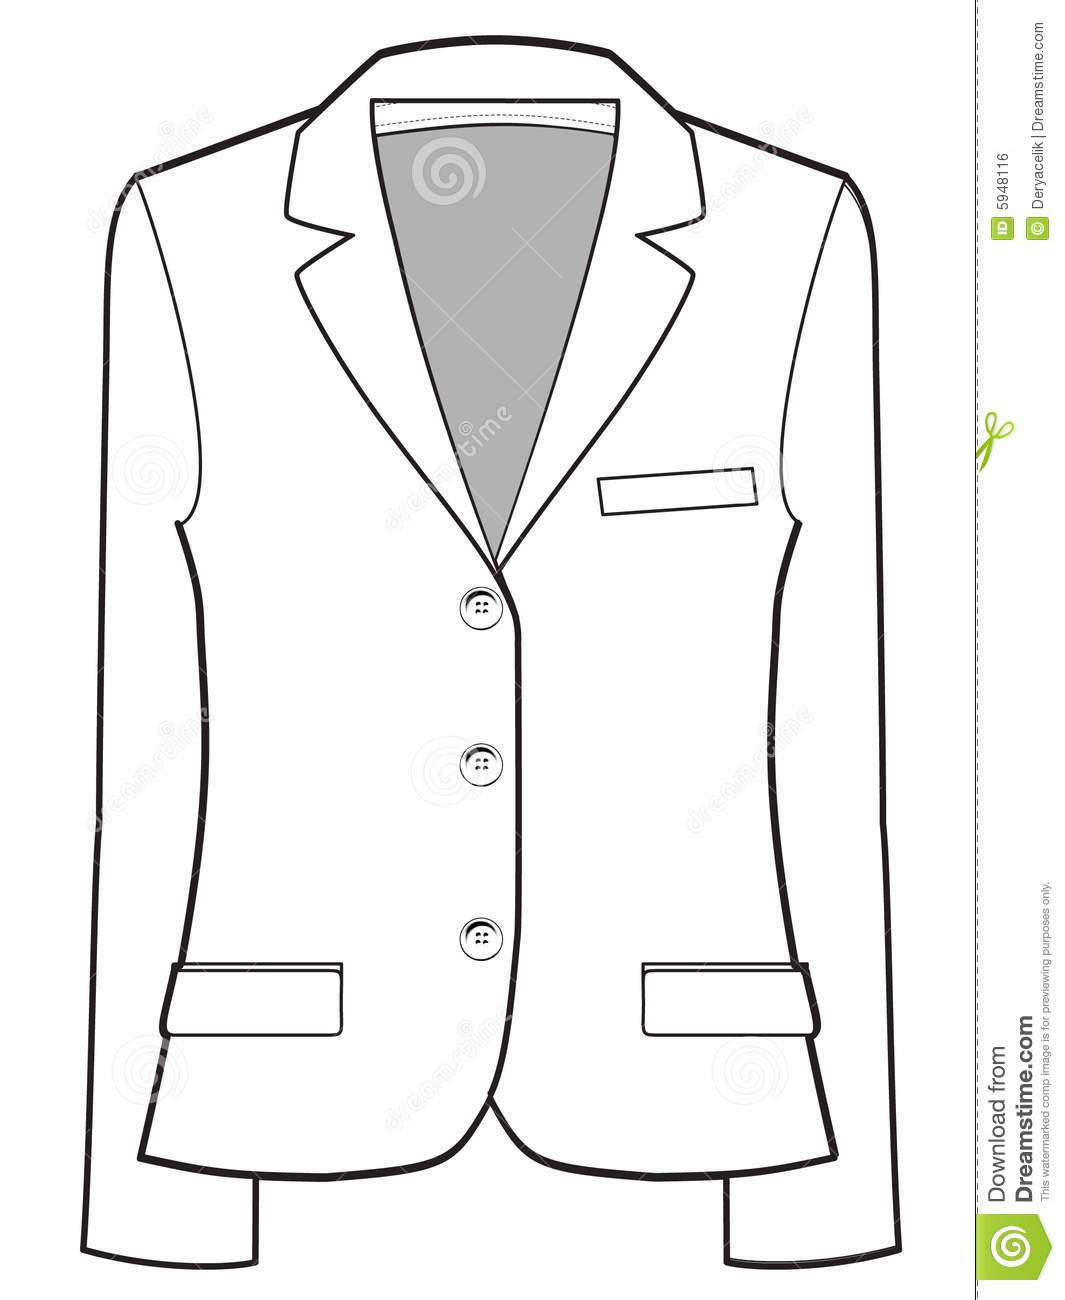 Jacket Vector Illustration Royalty Free Stock Image   Image  5948116